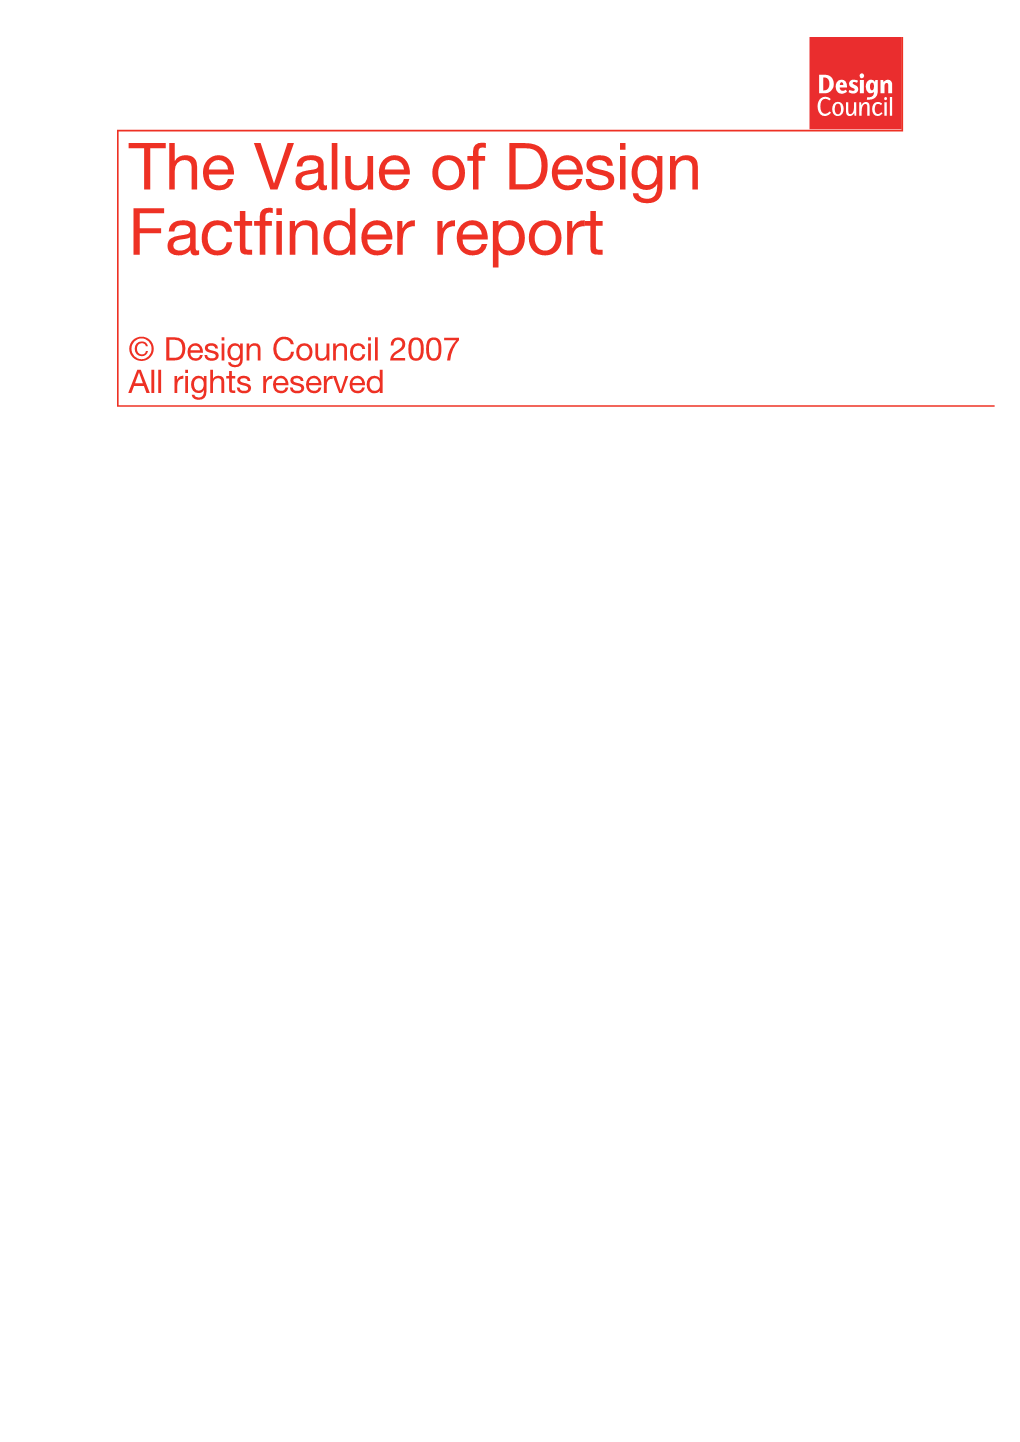 The Value of Design Factfinder Report